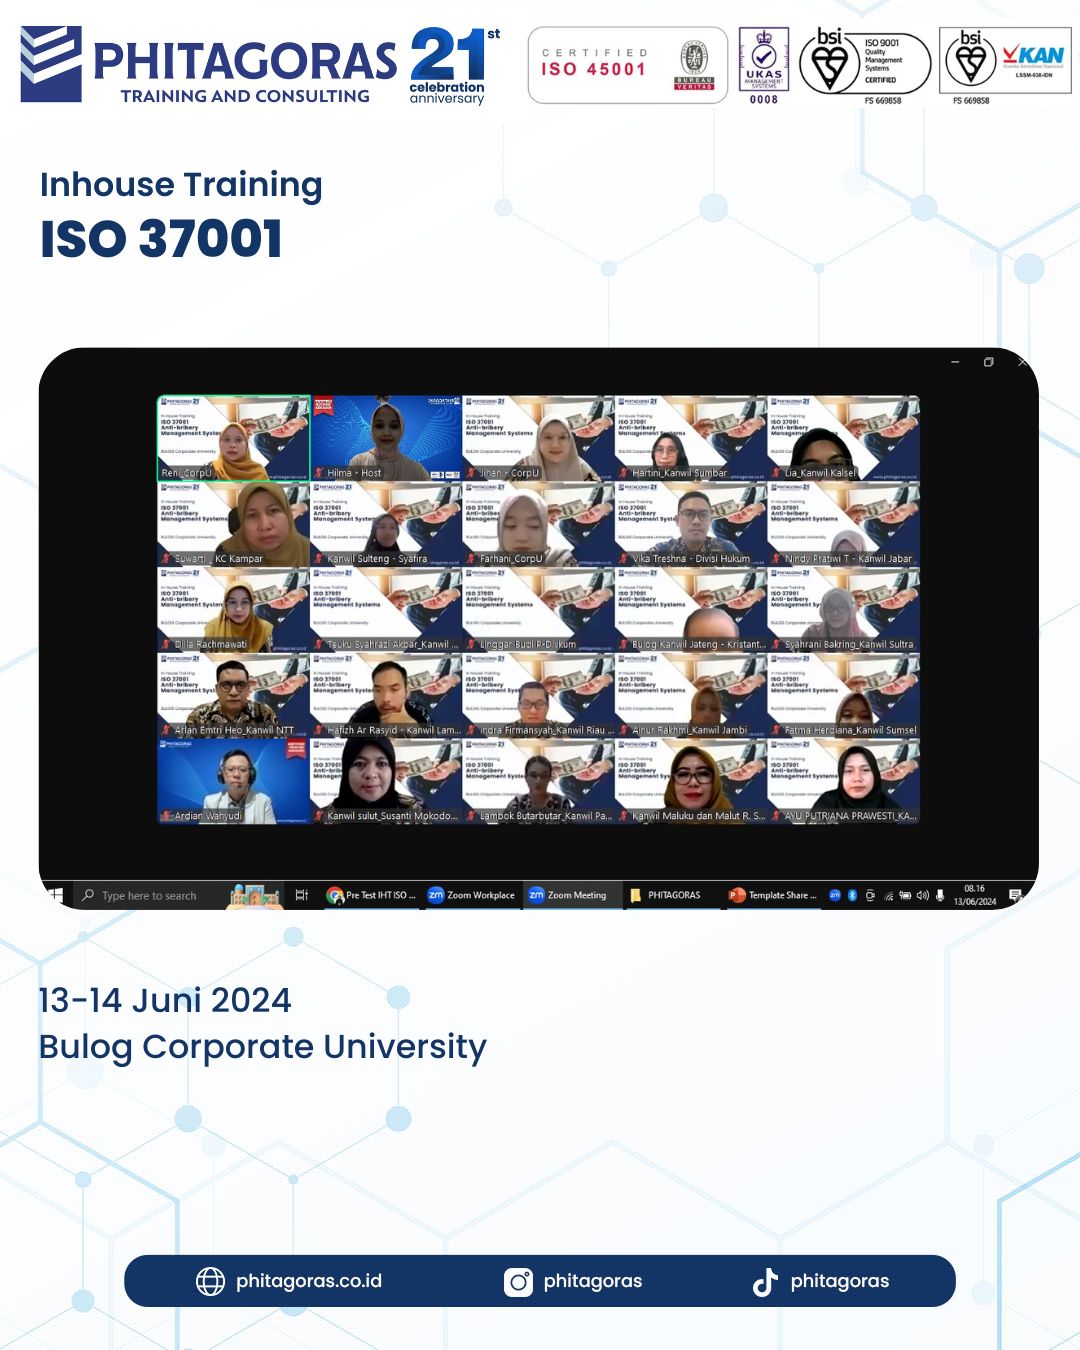 Inhouse Training ISO 37001 - Bulog Corporate University Tanggal 13-14 Juni 2024